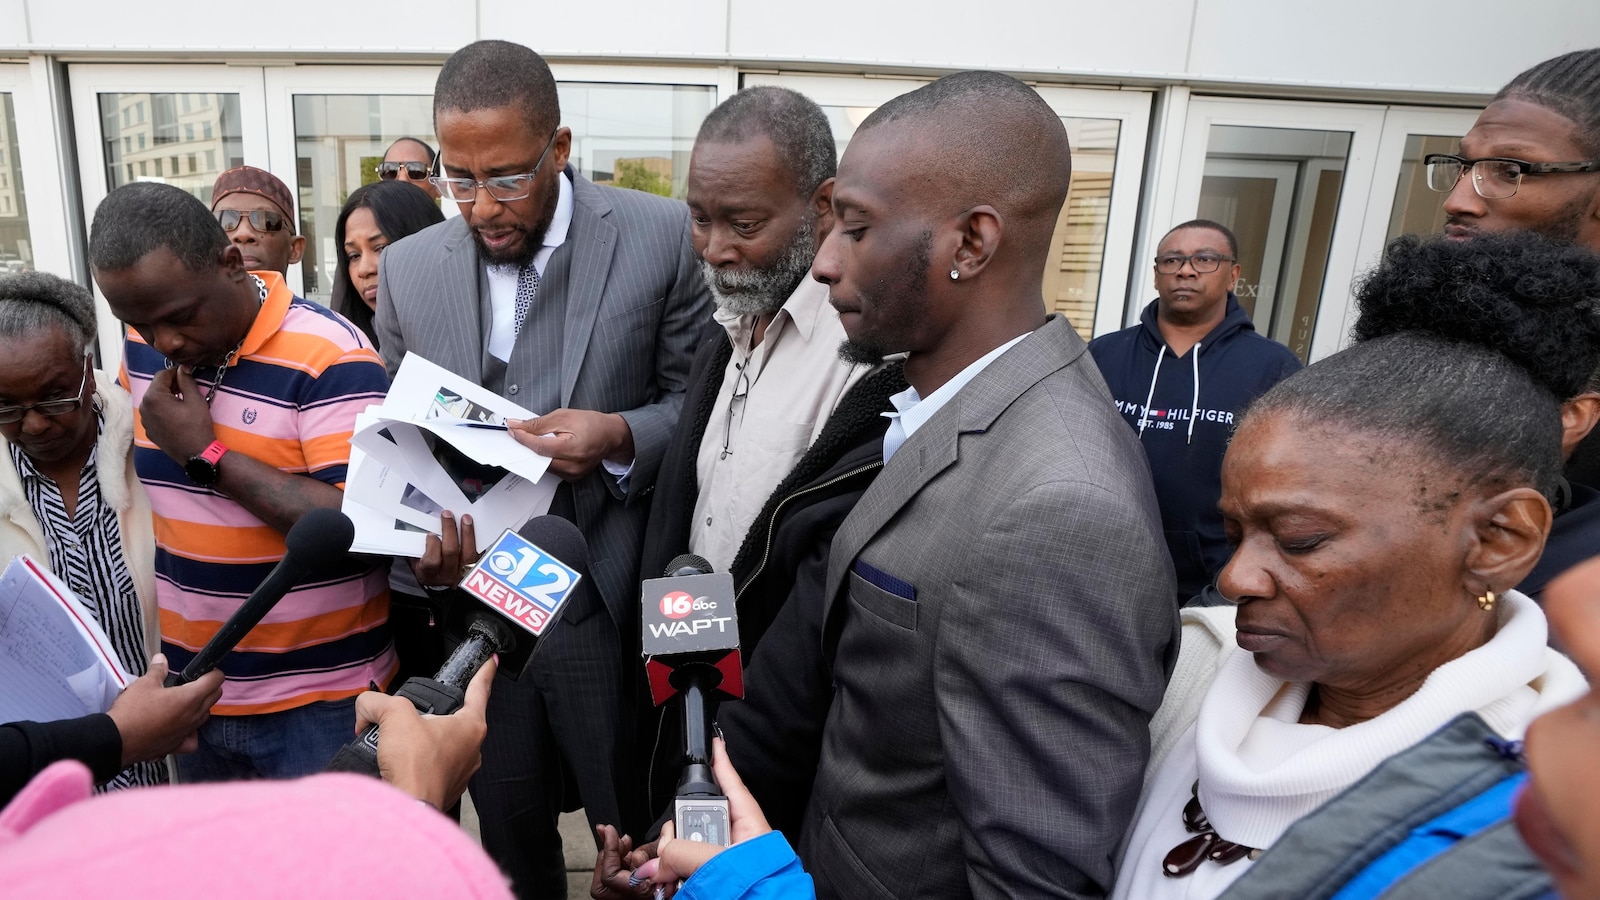 Last 2 Mississippi ex-officers to be sentenced for torturing 2 Black men in racist assault